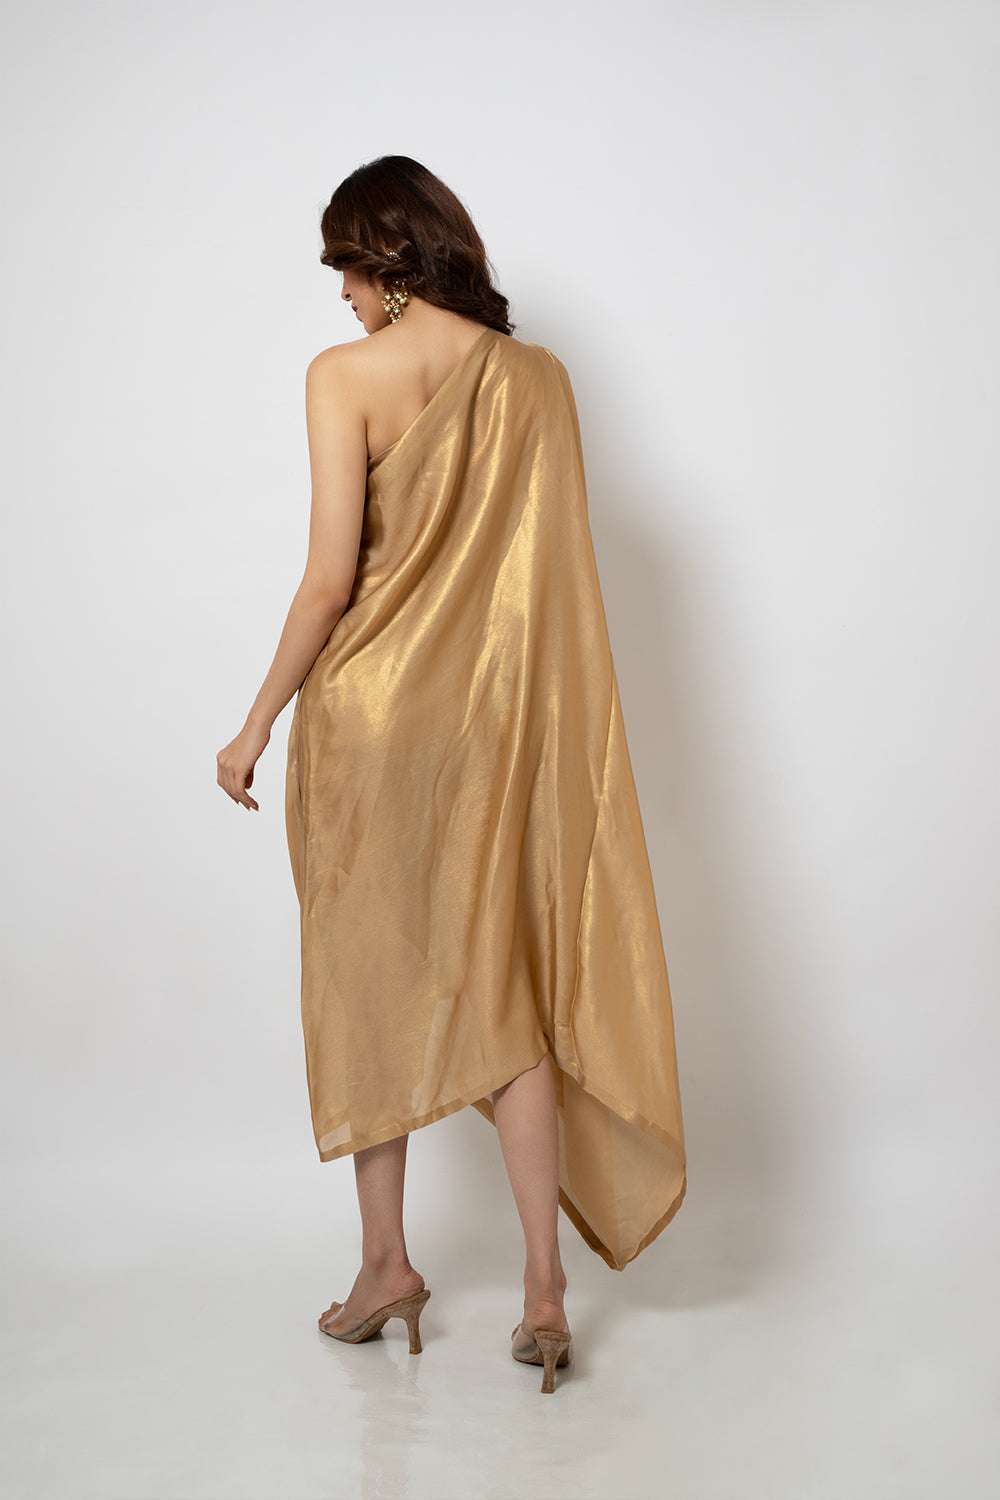 4. A zero waste gold shimmer georgette dress